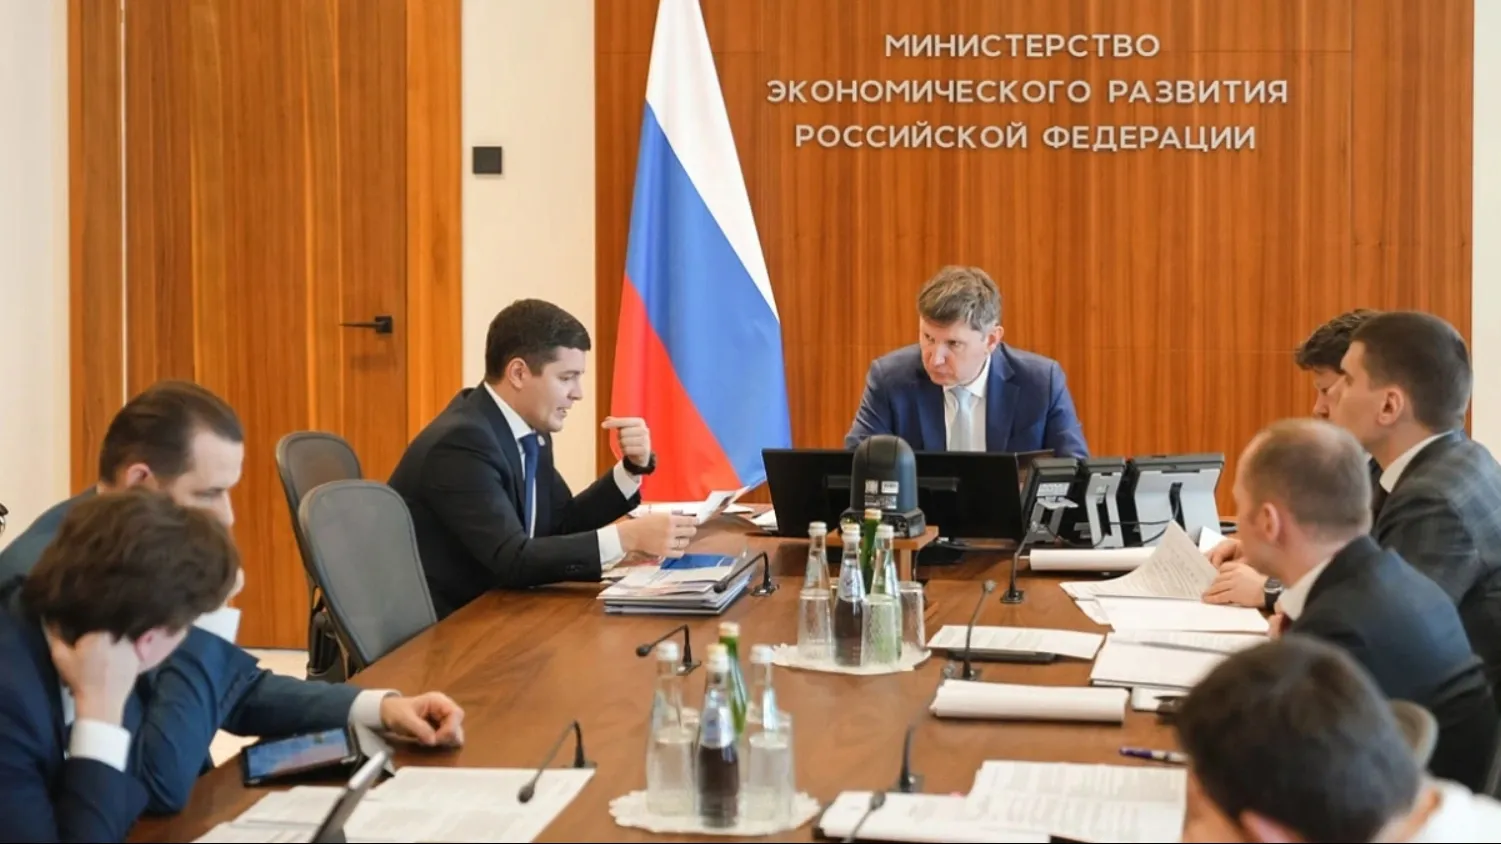 В Москве прошла рабочая встреча губернатора ЯНАО Артюхова и министра Решетникова. Фото предоставлено пресс-службой губернатора ЯНАО